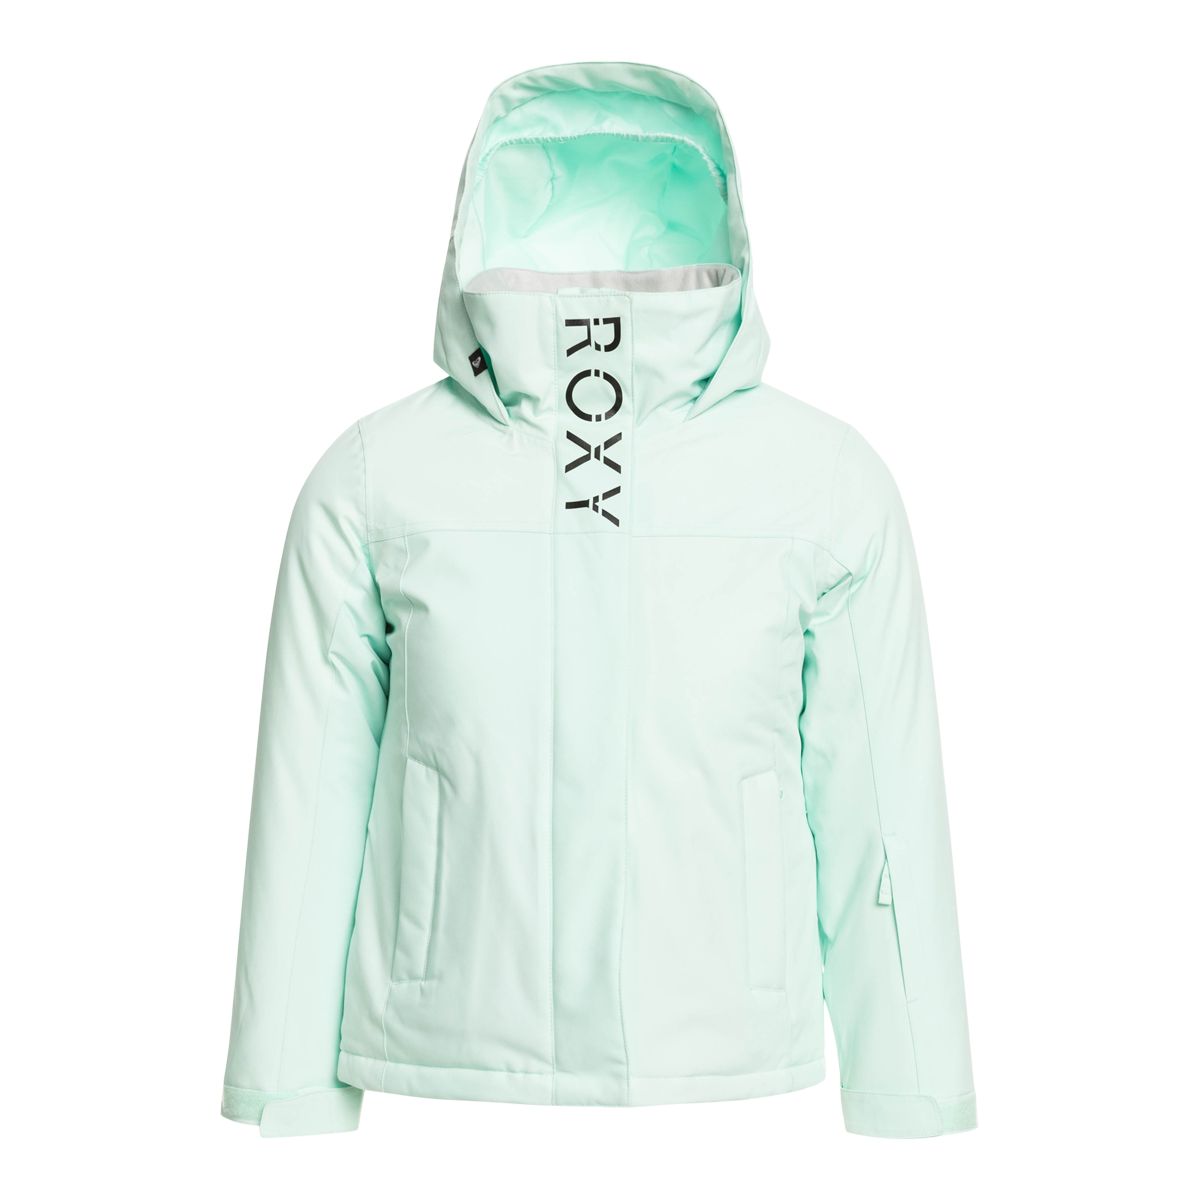 Roxy Girls' Galaxy Winter Jacket